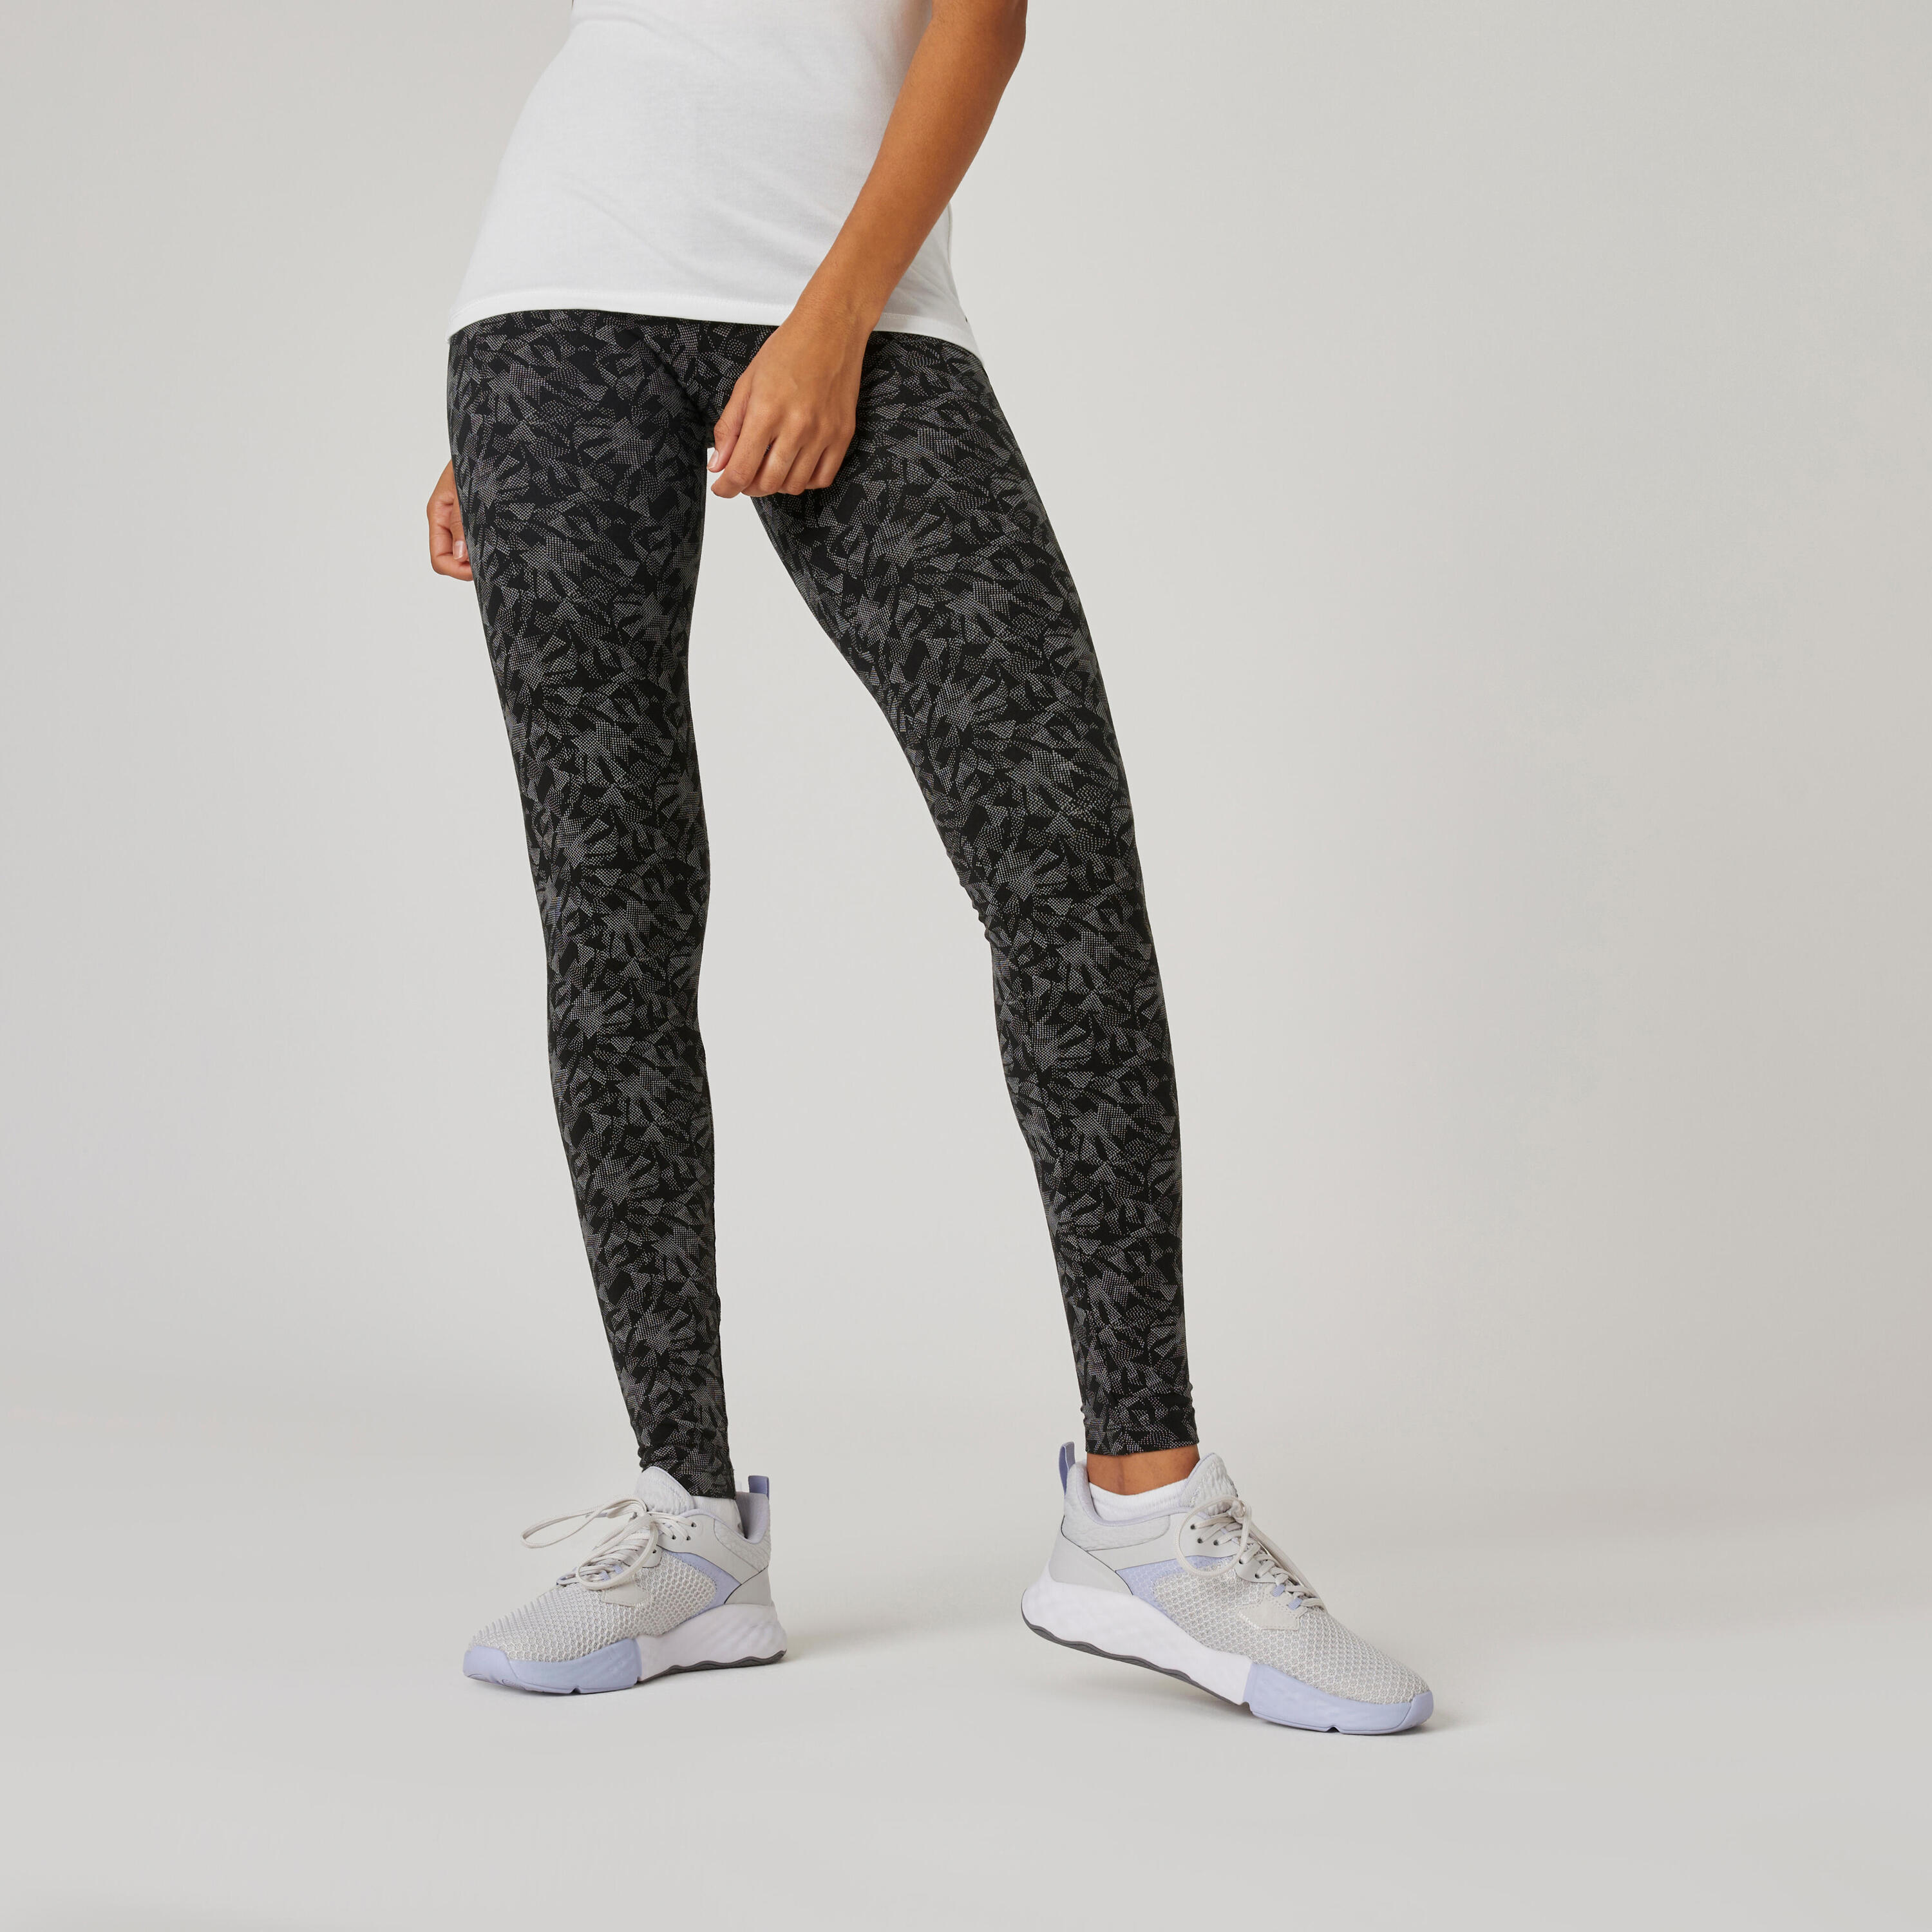 DOMYOS Women's Slim-Fit Fitness Leggings Fit+ 500 - Black/Grey Print